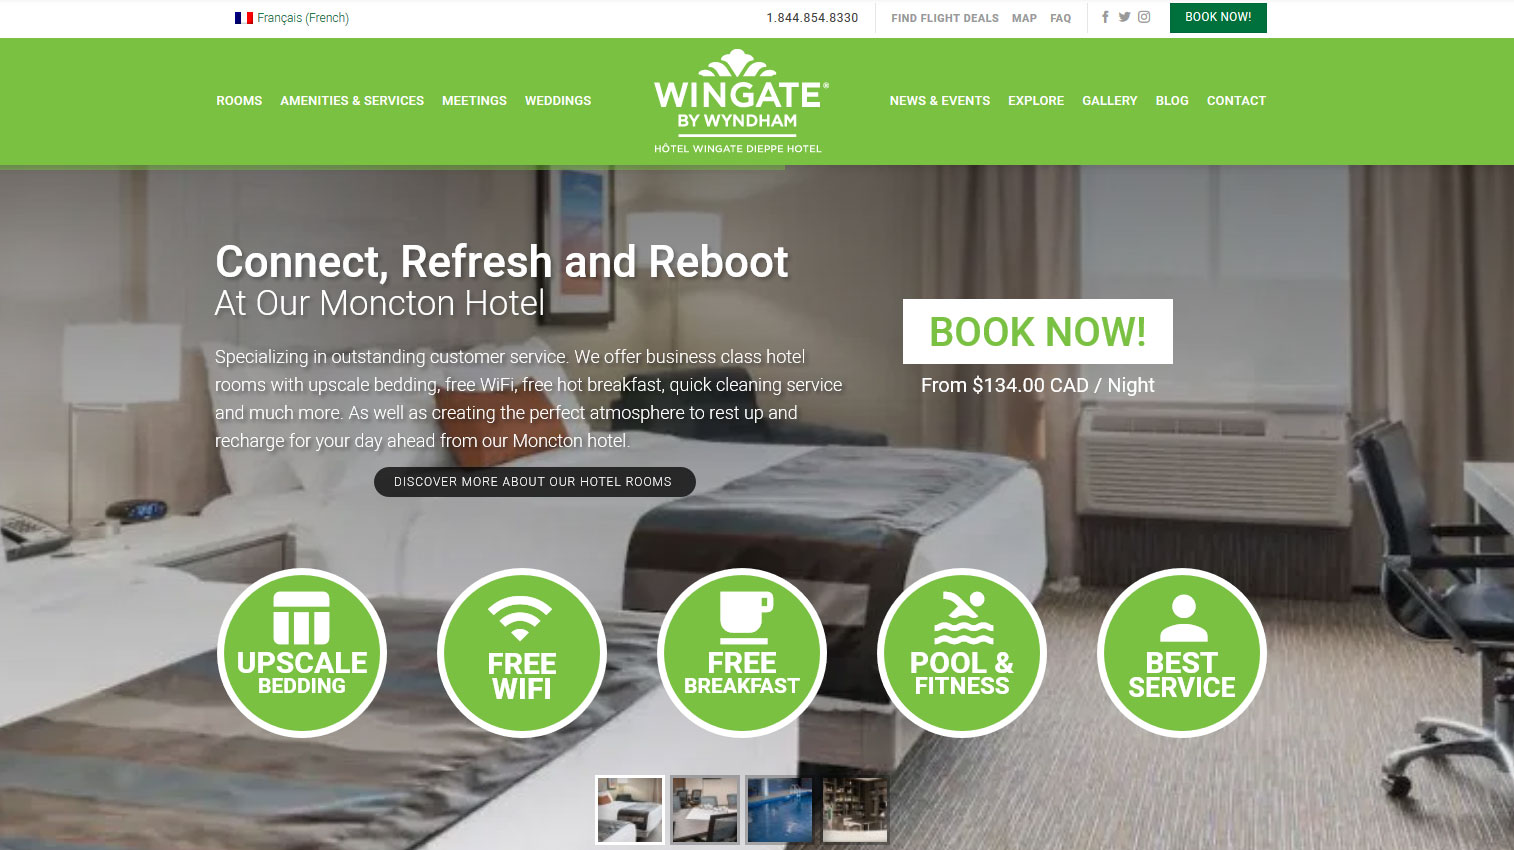 Wingate by Wyndham, Hotel Wingate Dieppe website design, web design, seo search engine optimization